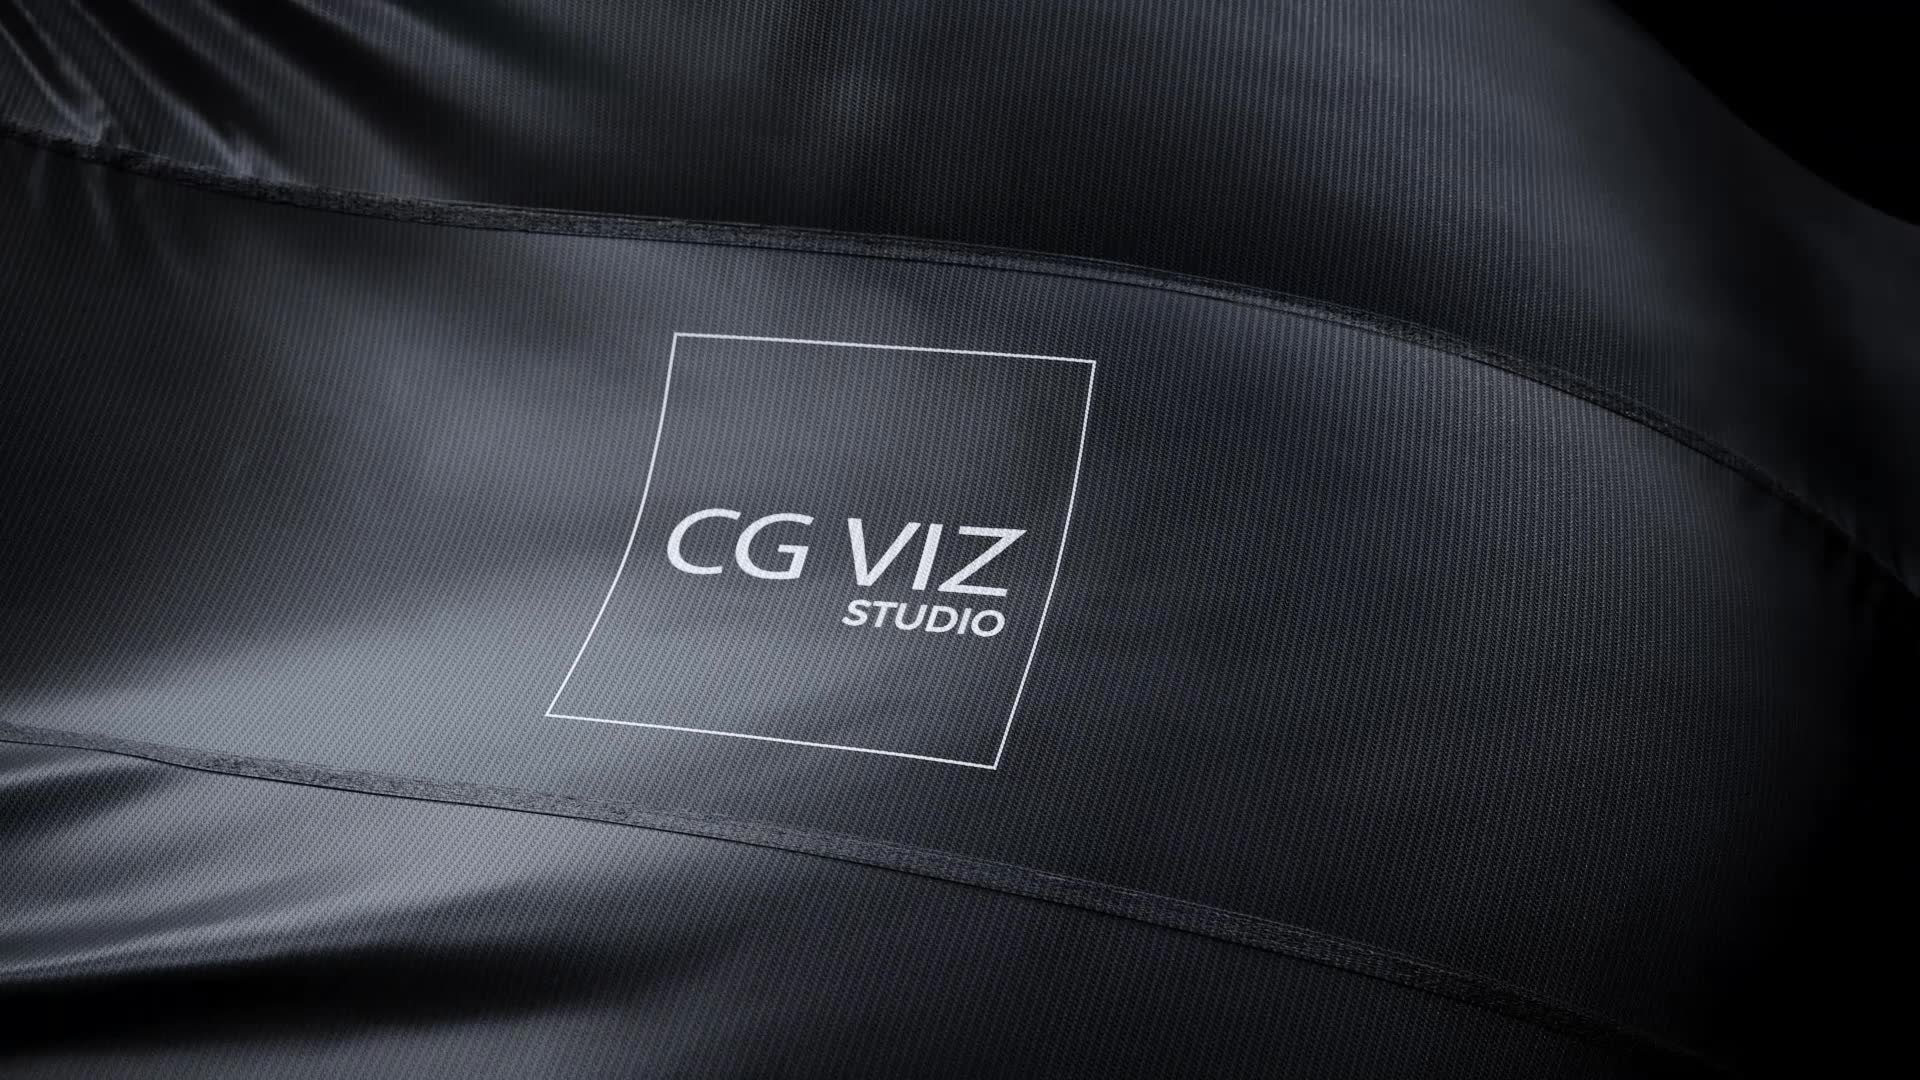 CG VIZ STUDIO 3D Rendering Services for Architectural Visualization & Product Design services